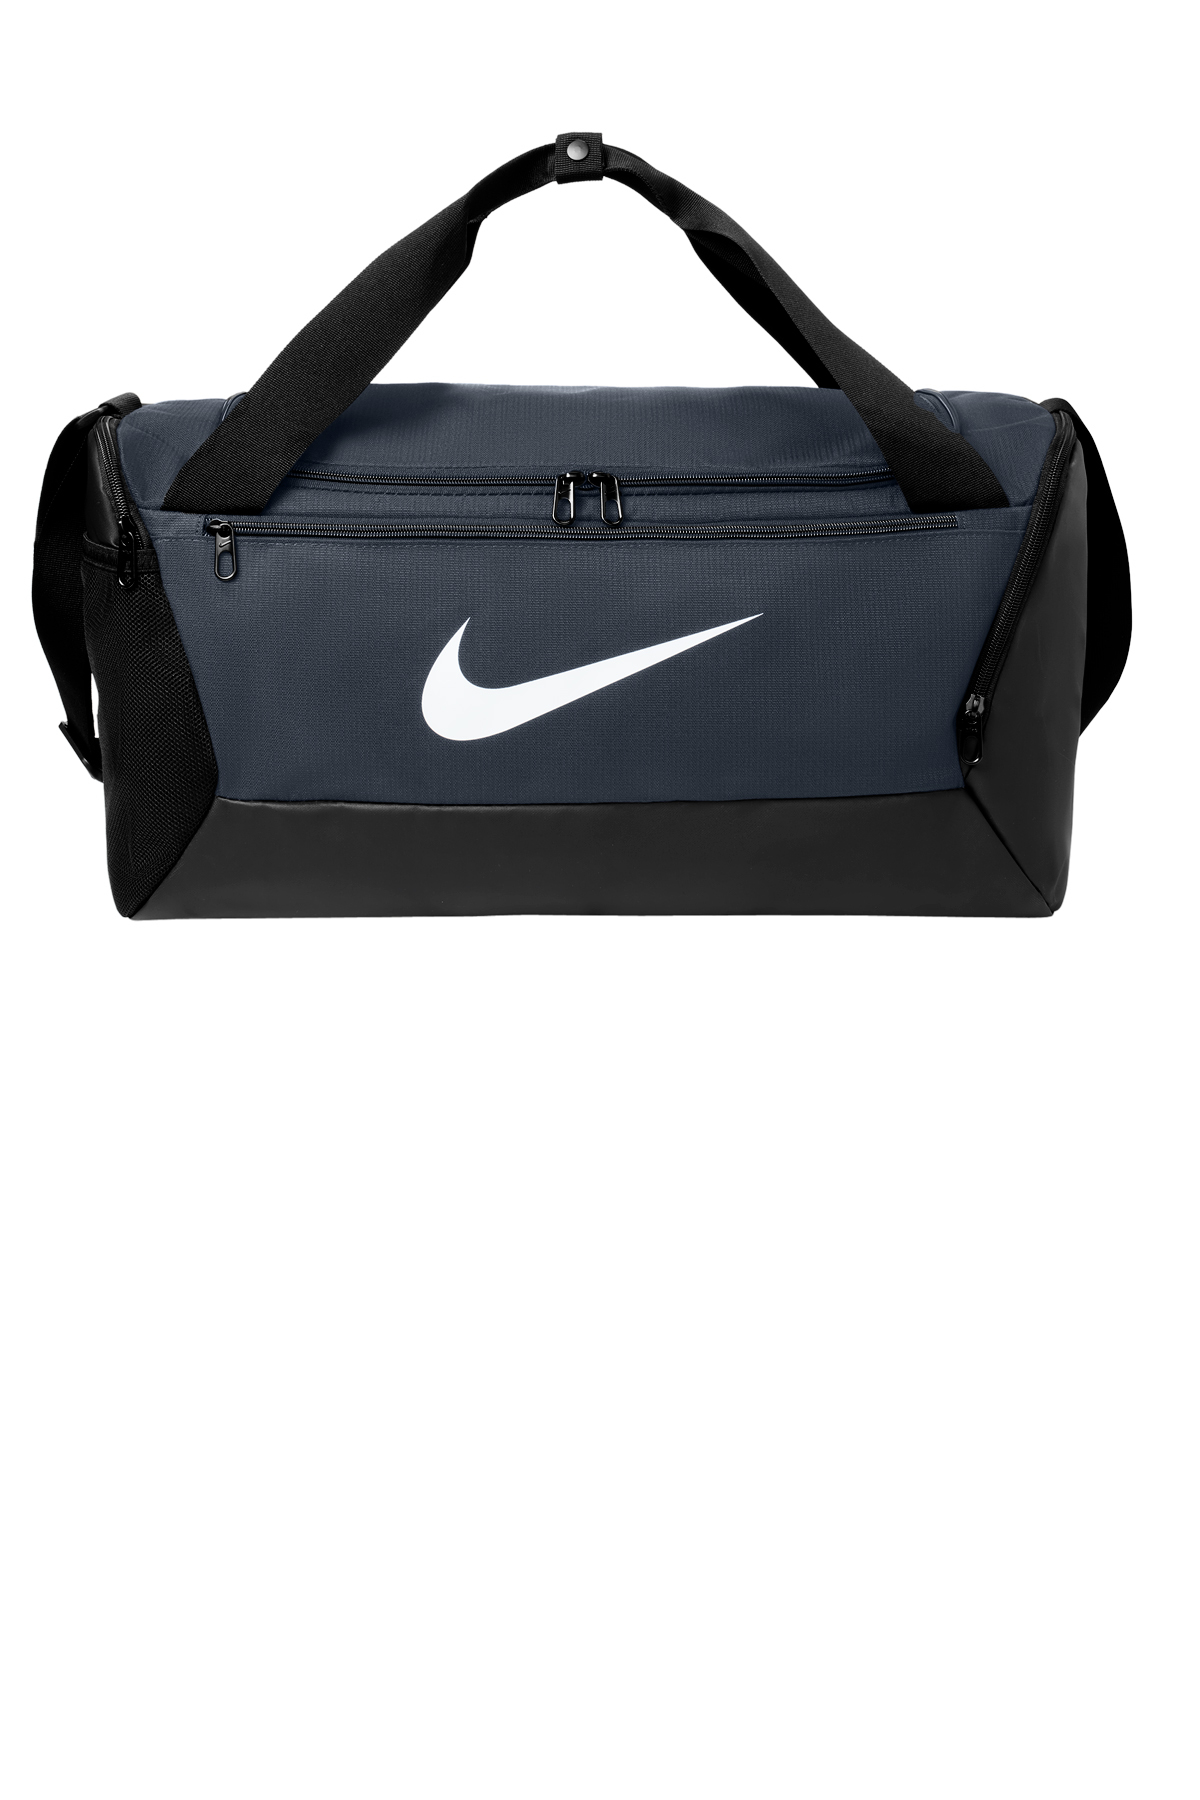 Nike Brasilia Small Duffel, Product